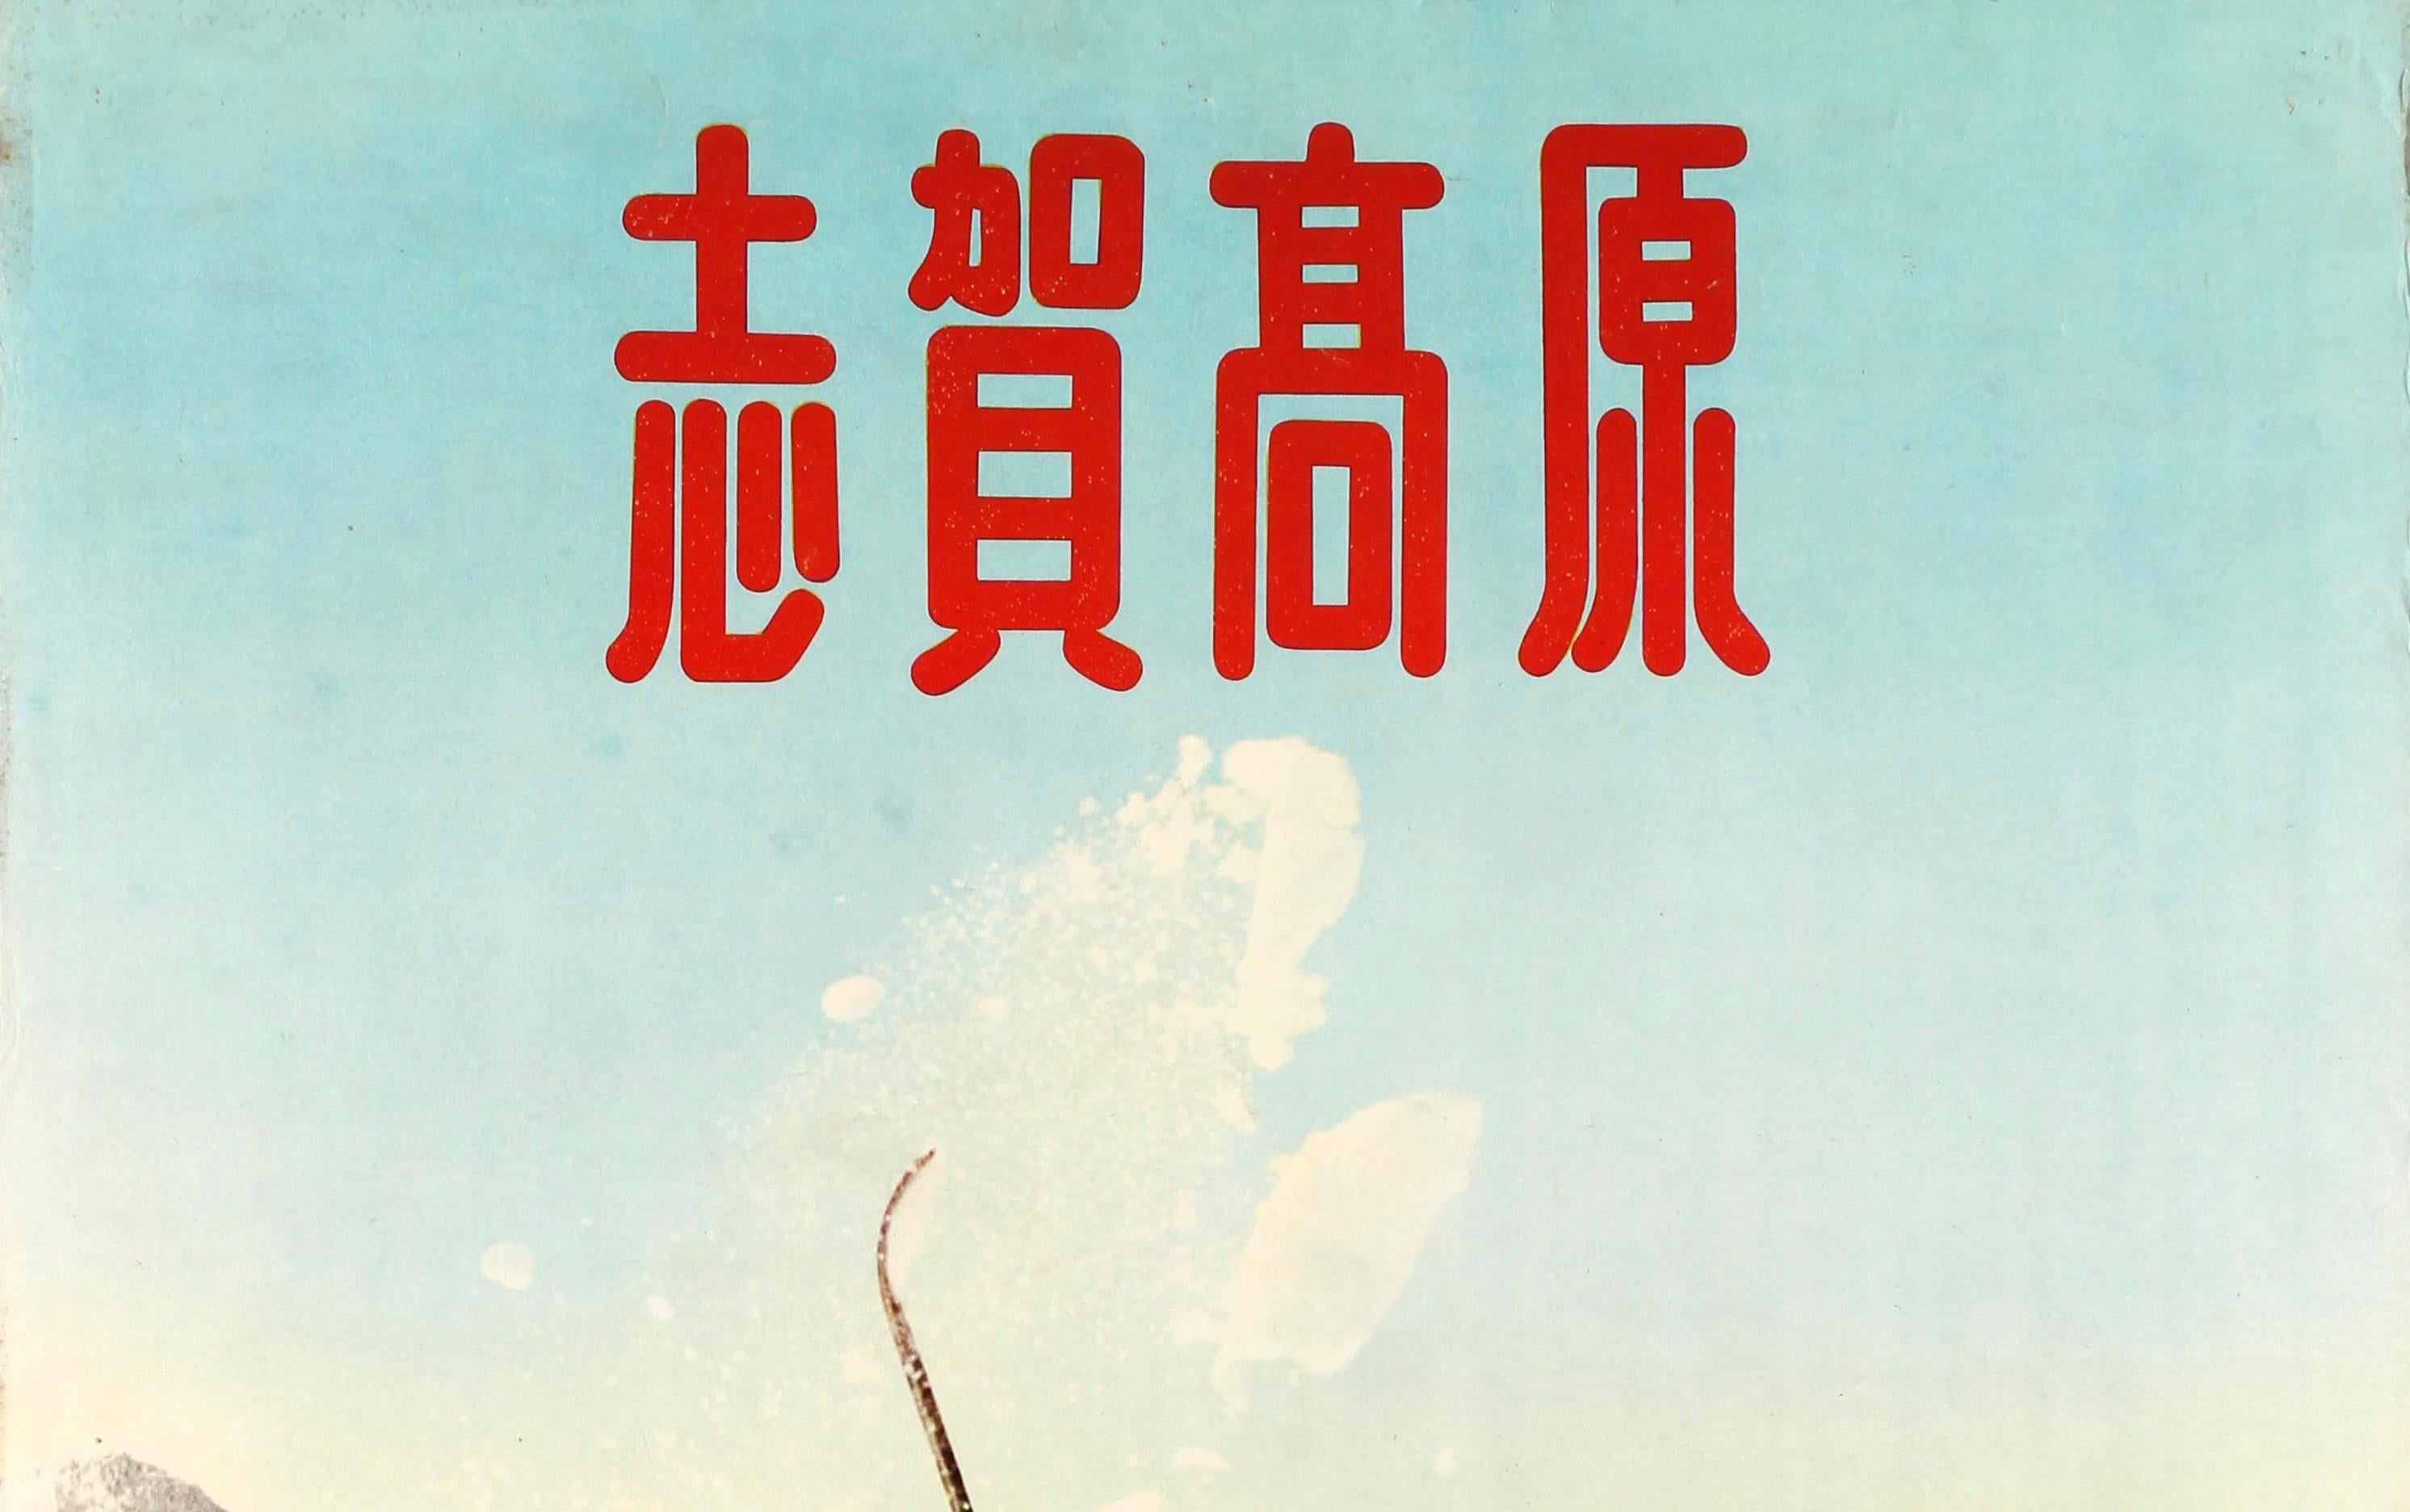 Original Vintage Winter Sport Skiing Poster Shiga Kogen Ski Resort Japan Skier - Print by Unknown